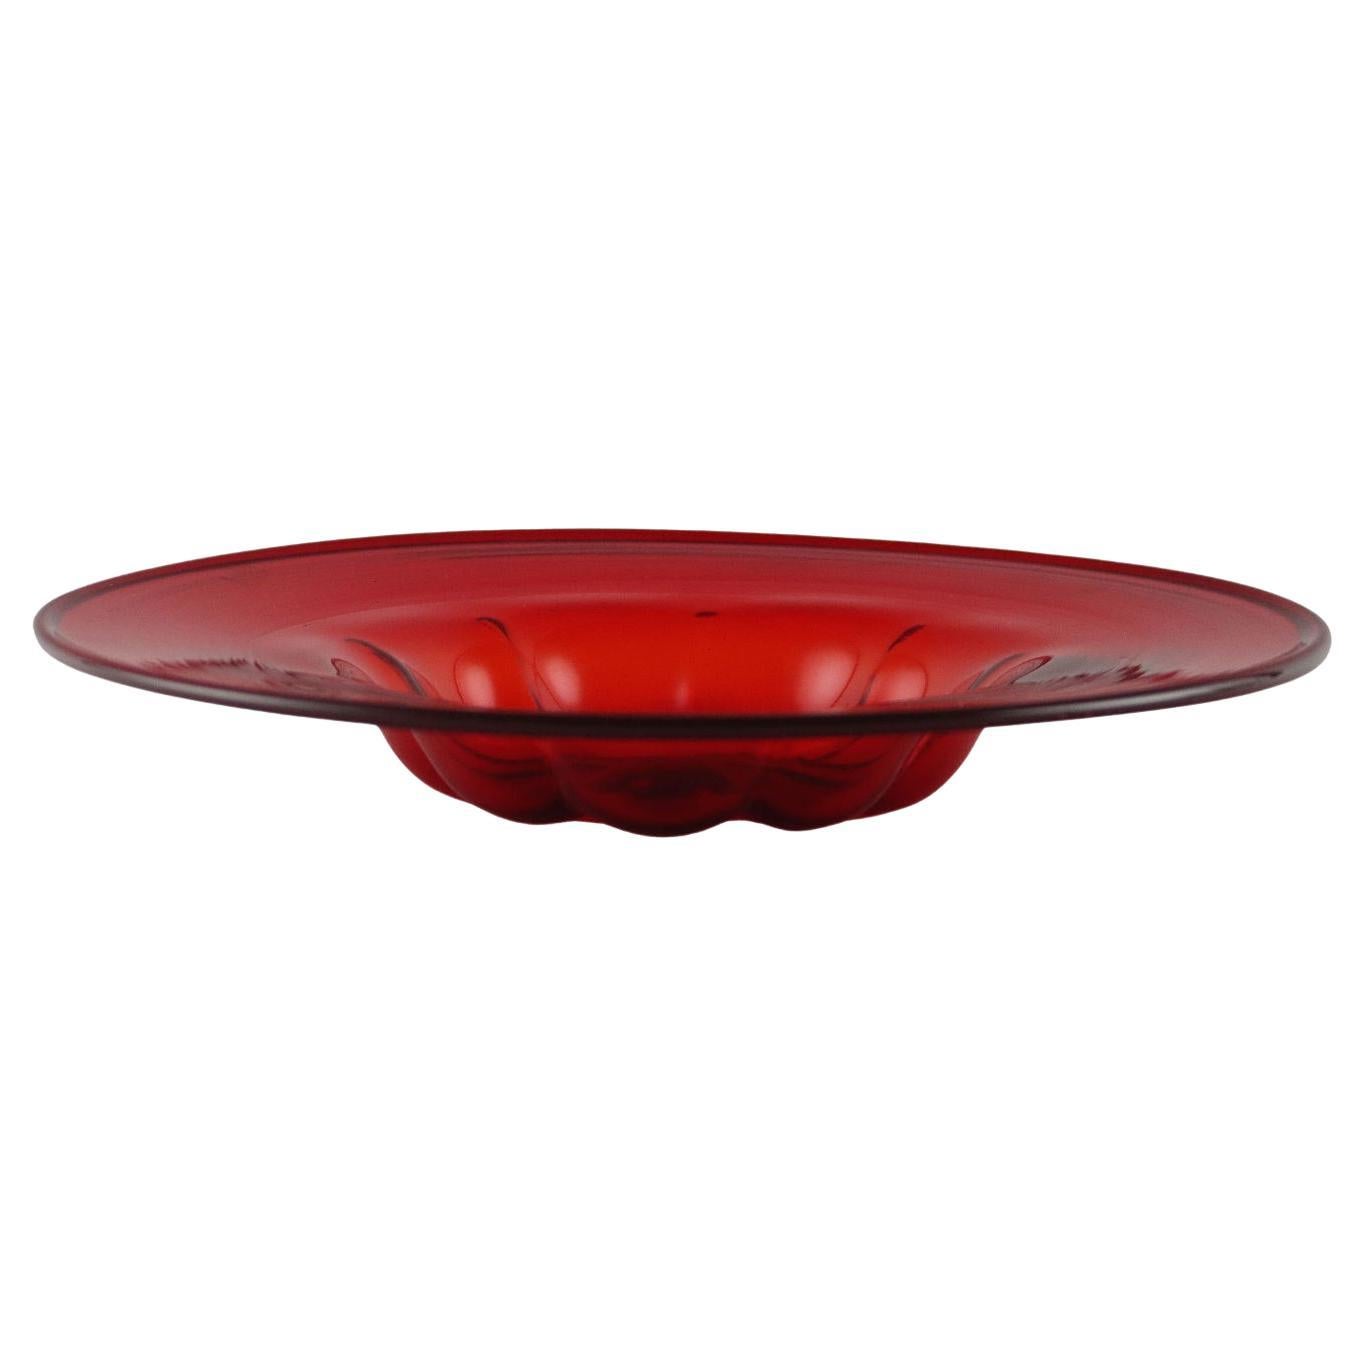 Vittorio Zecchin Blown Glass Dish, 1920s, red